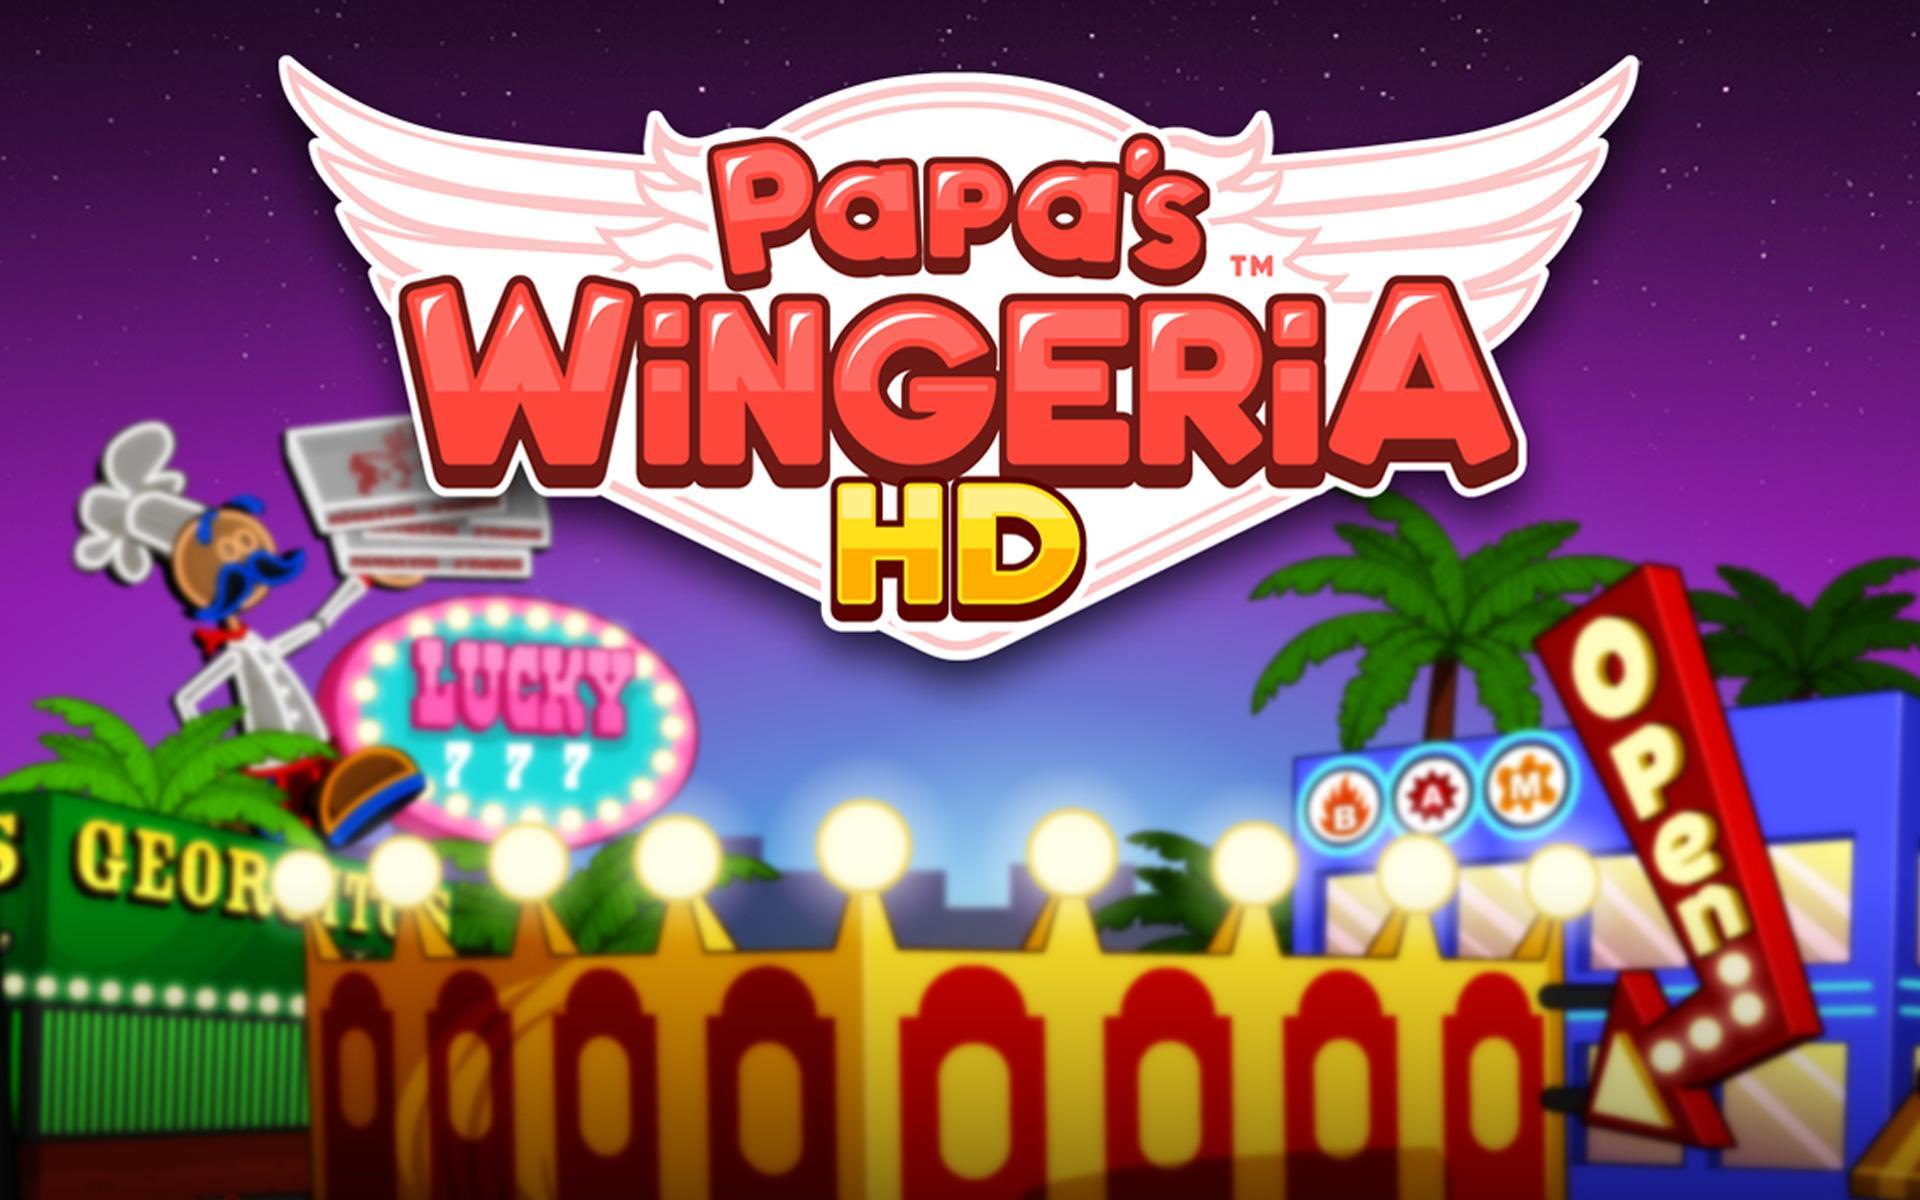 Screenshot 1 of Papas Wingeria HD 